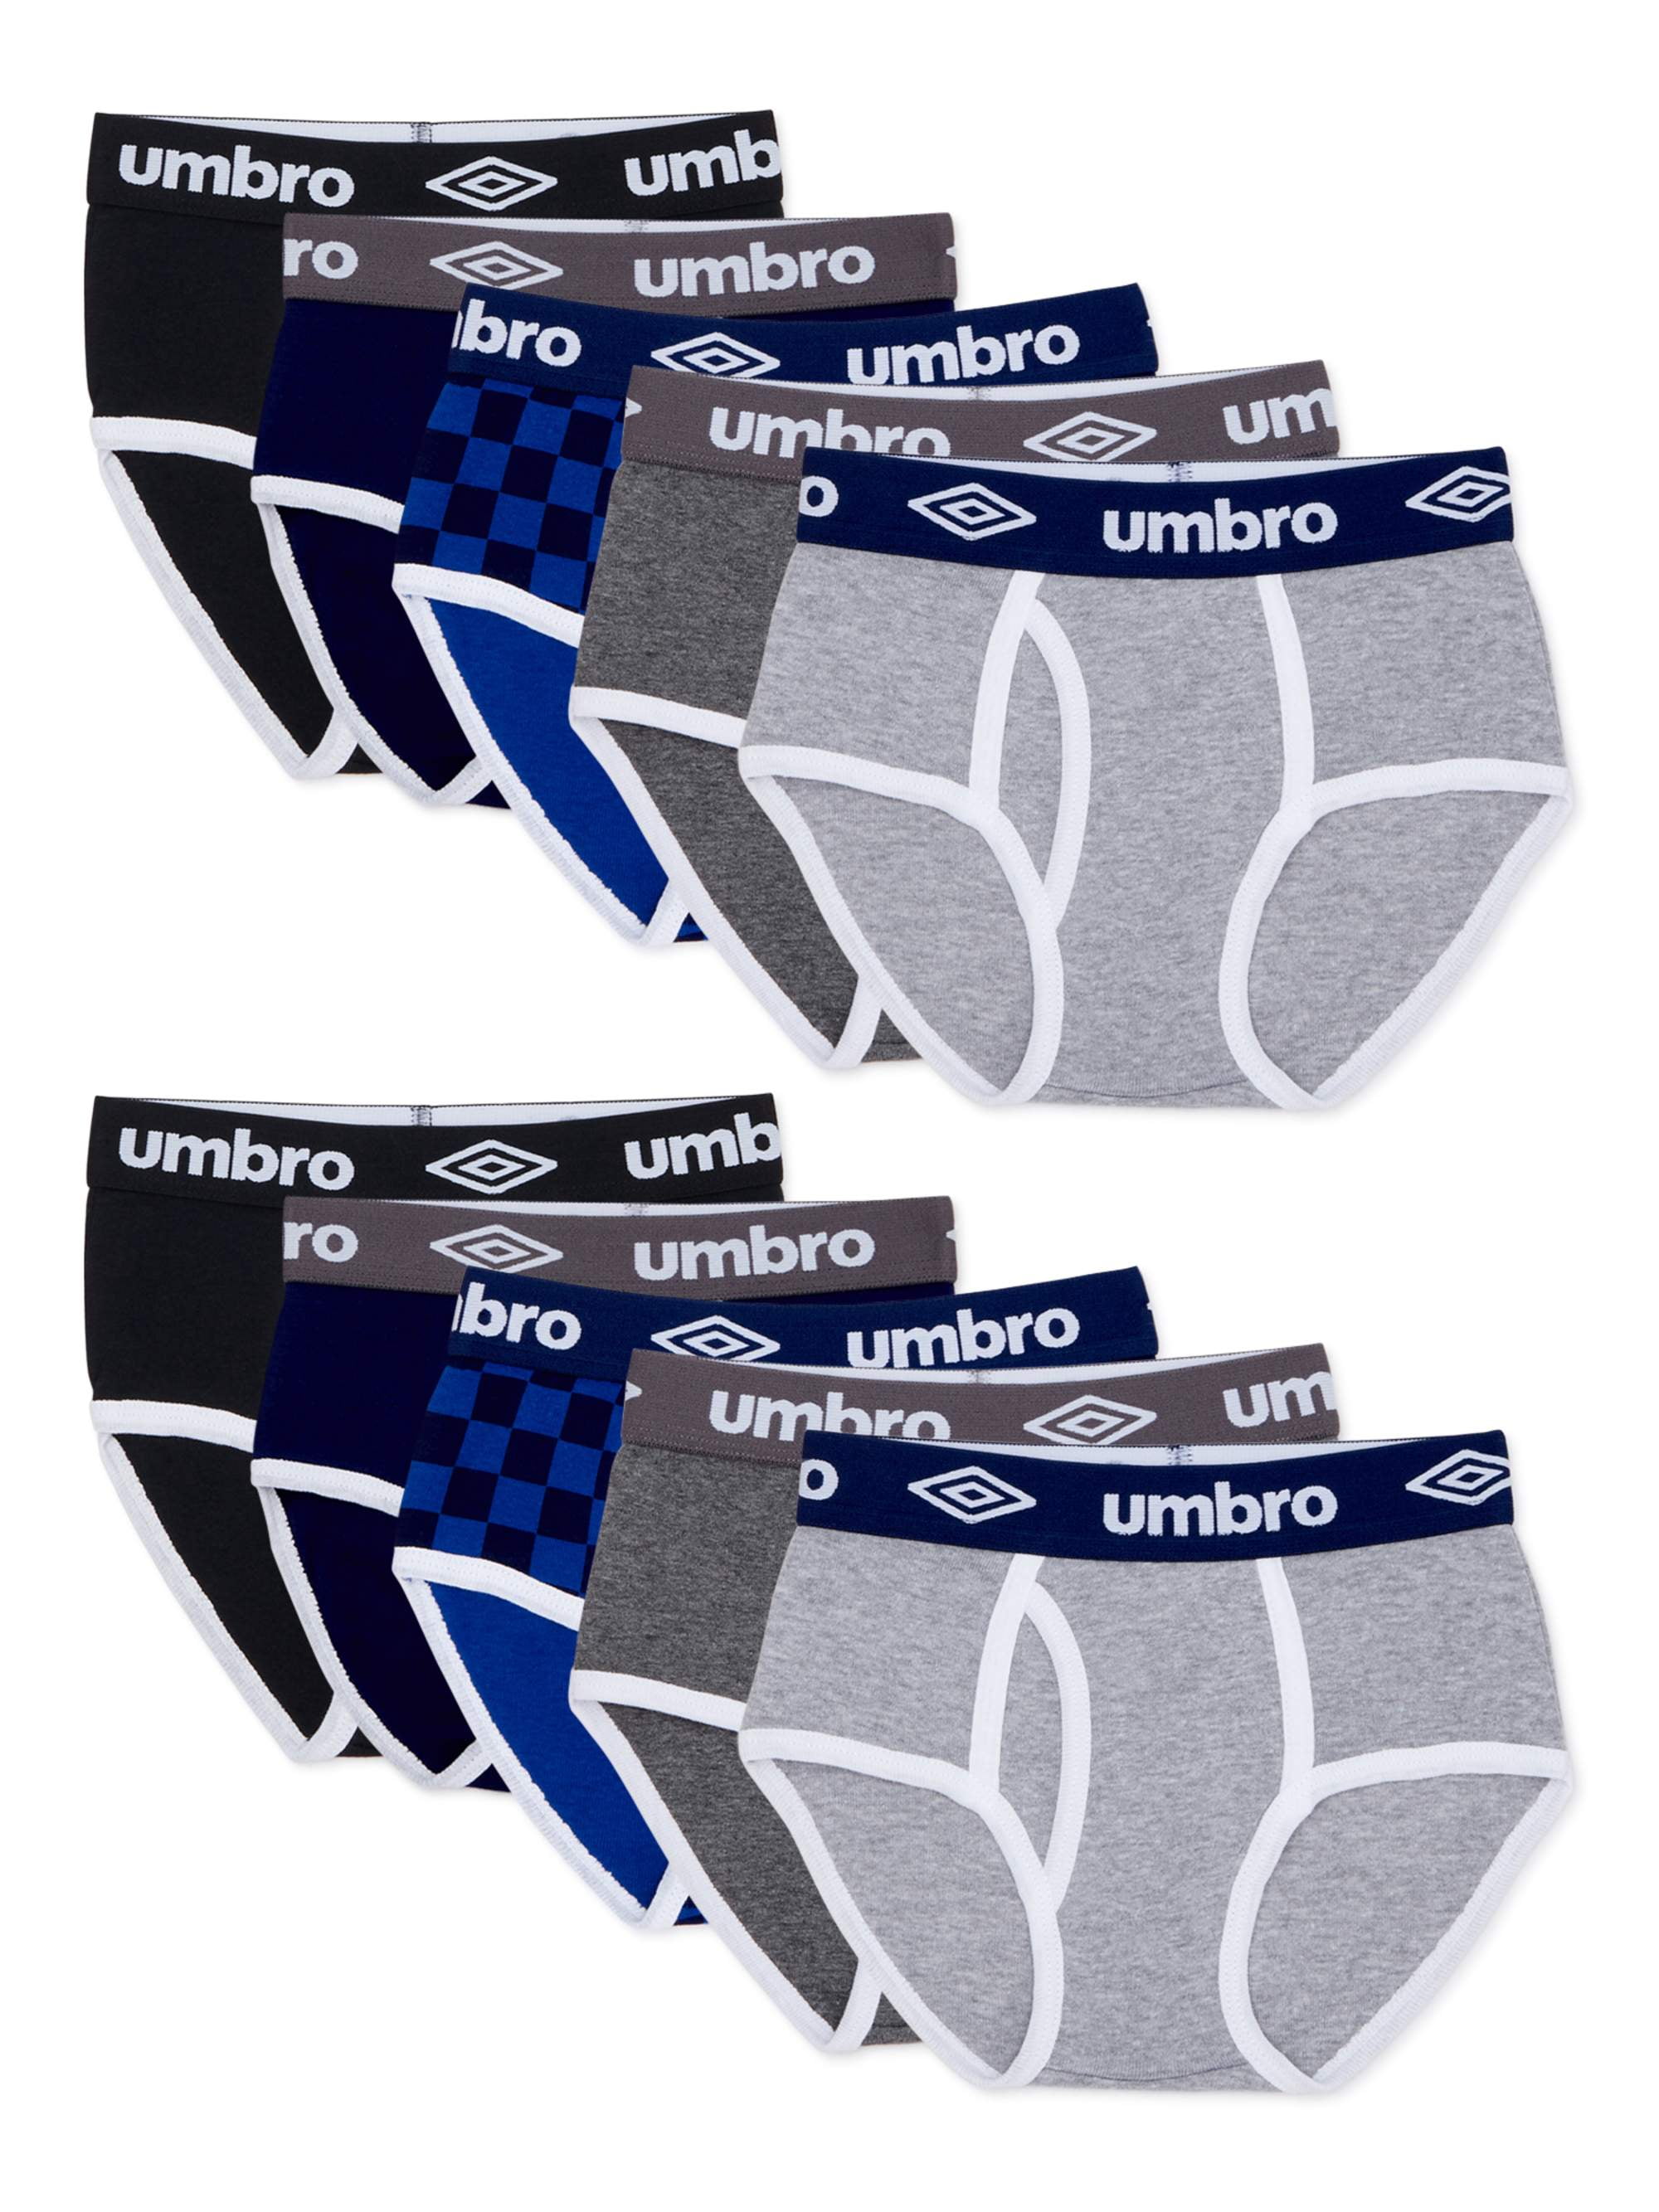 Umbro - Umbro Boys Underwear, 10 Pack Cotton Briefs Sizes 4-16